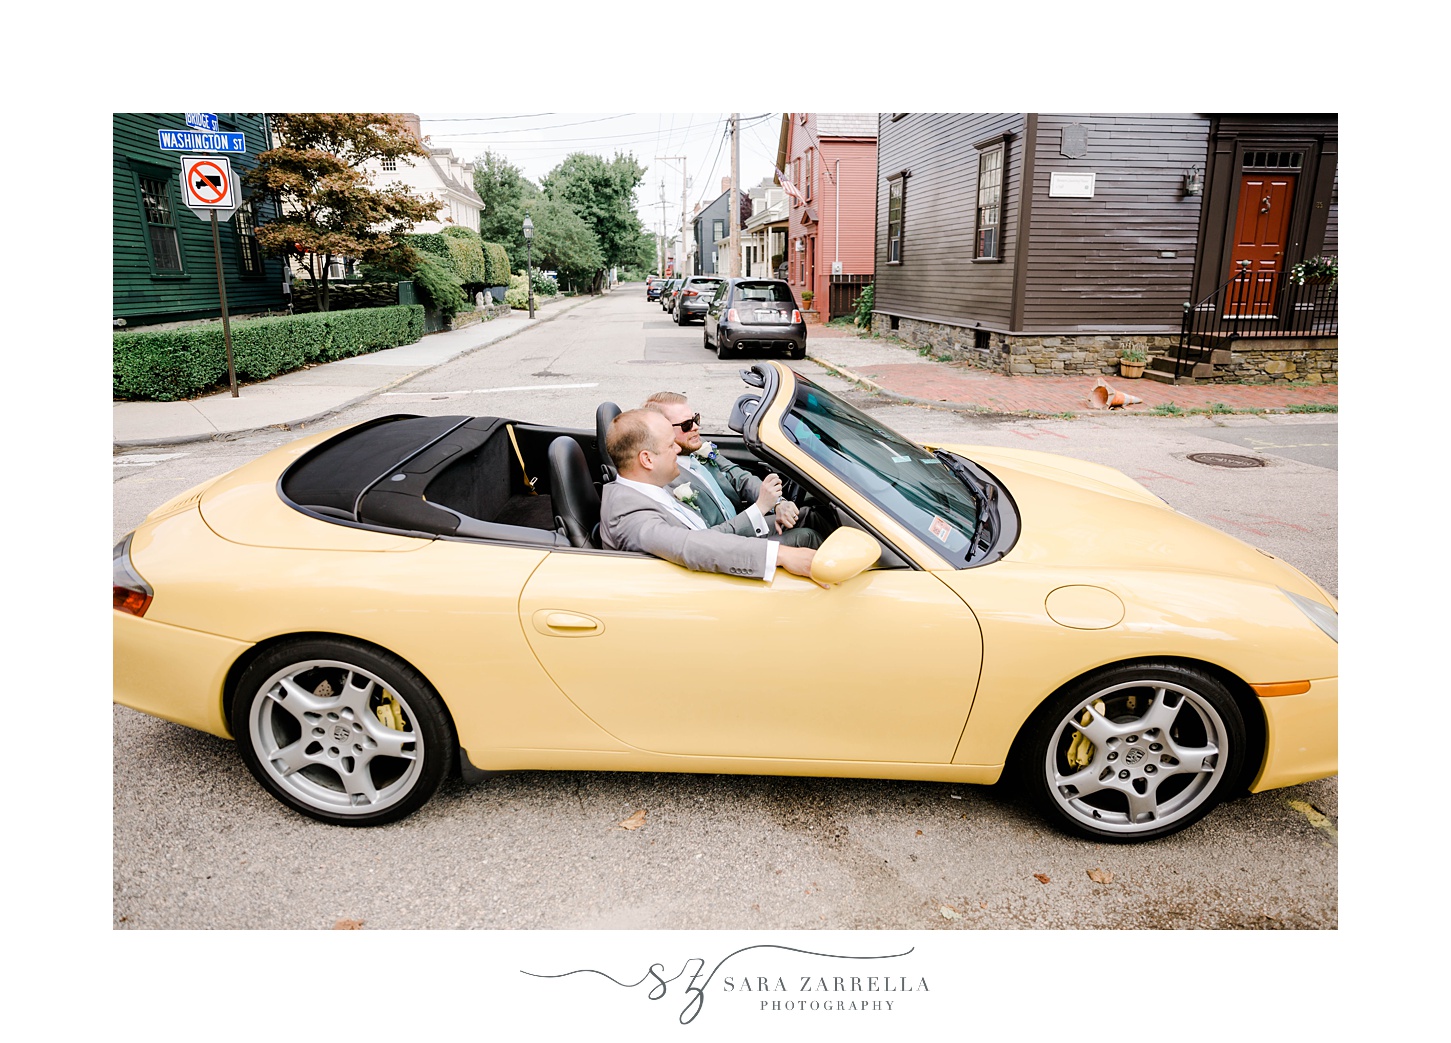 groom drives through Rhode Island in yellow car